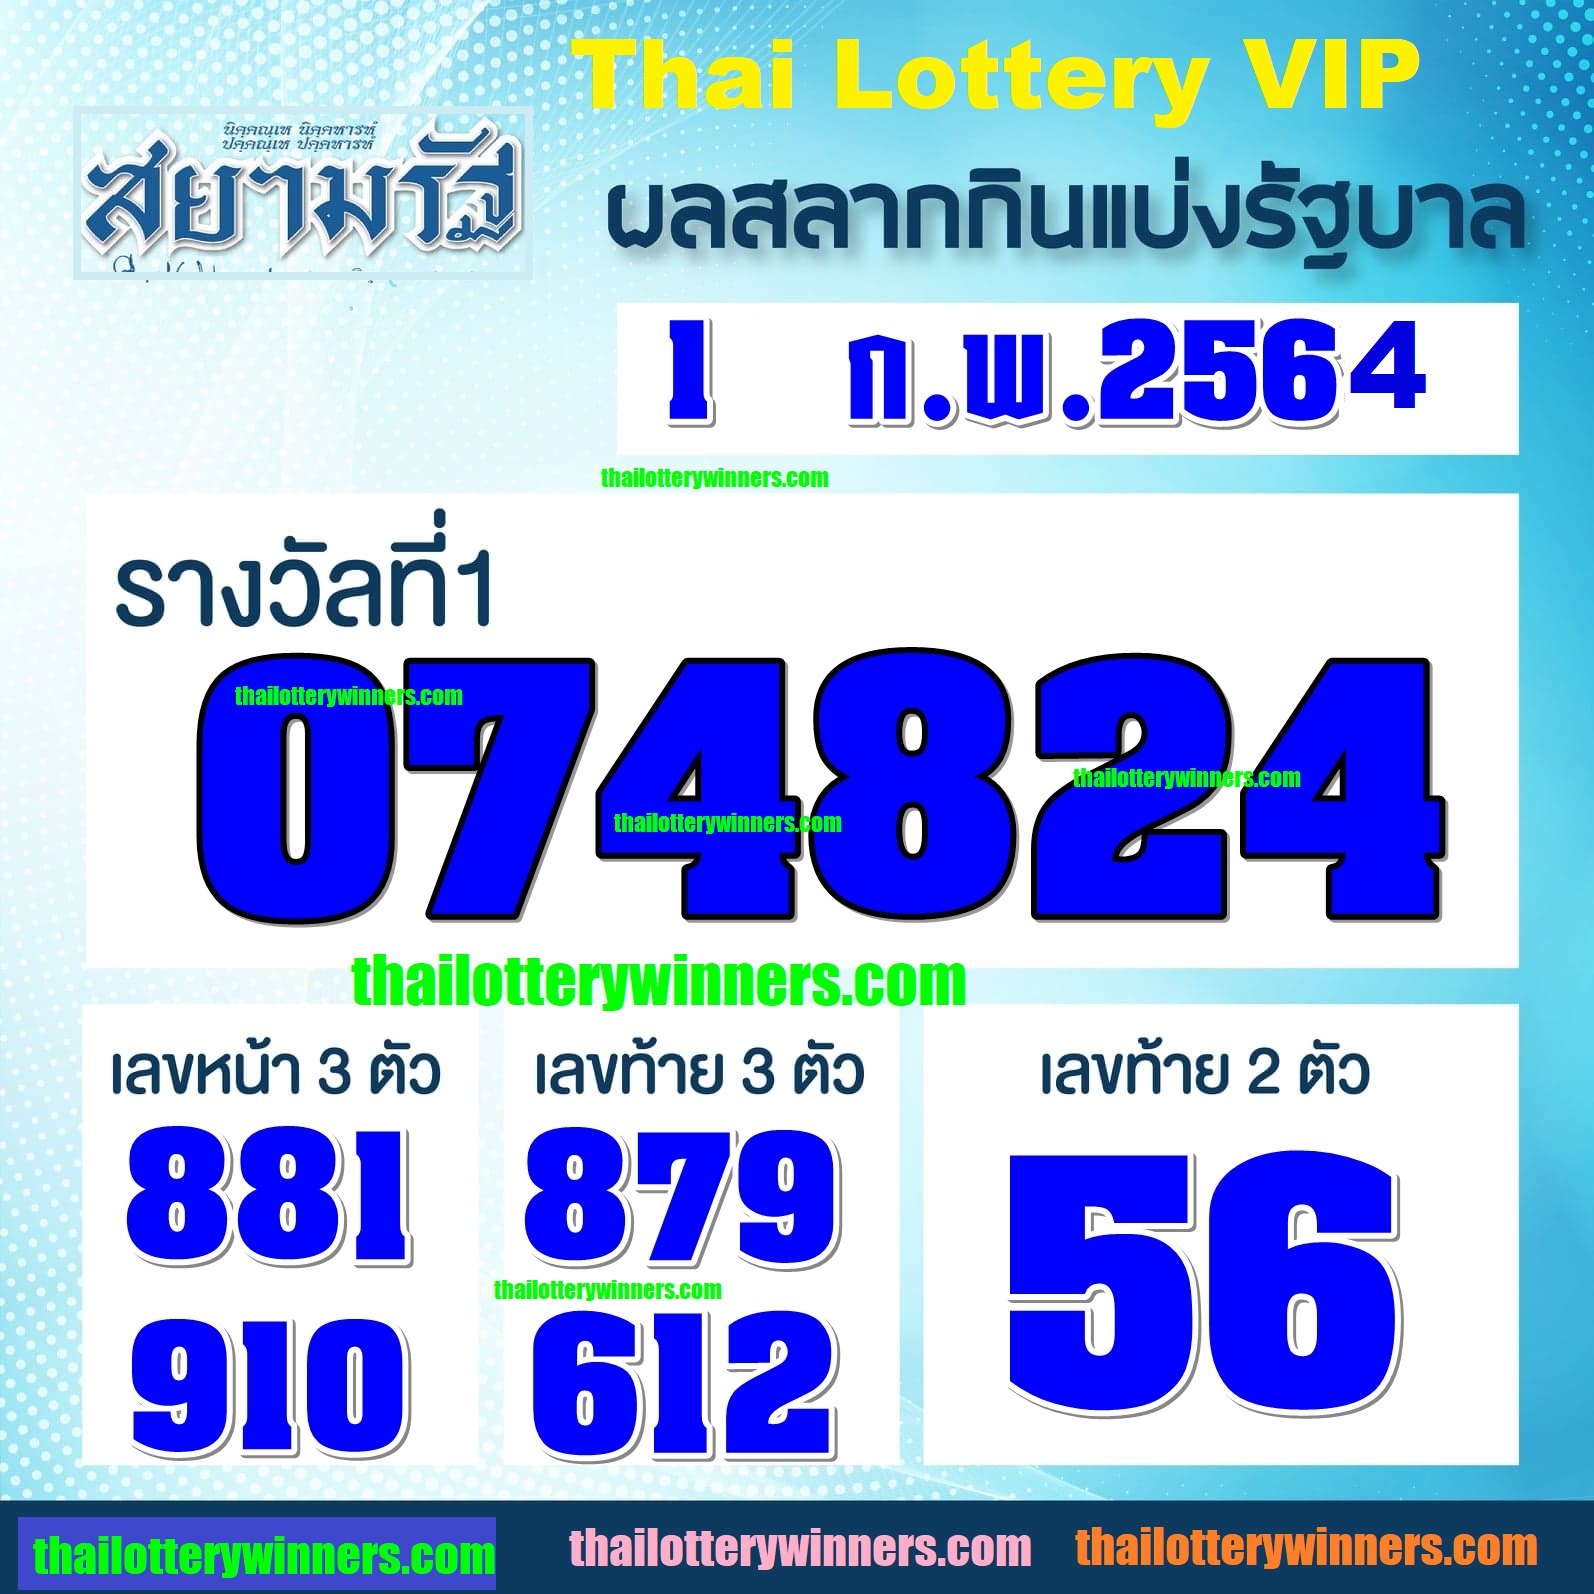 OK Thai Lottery